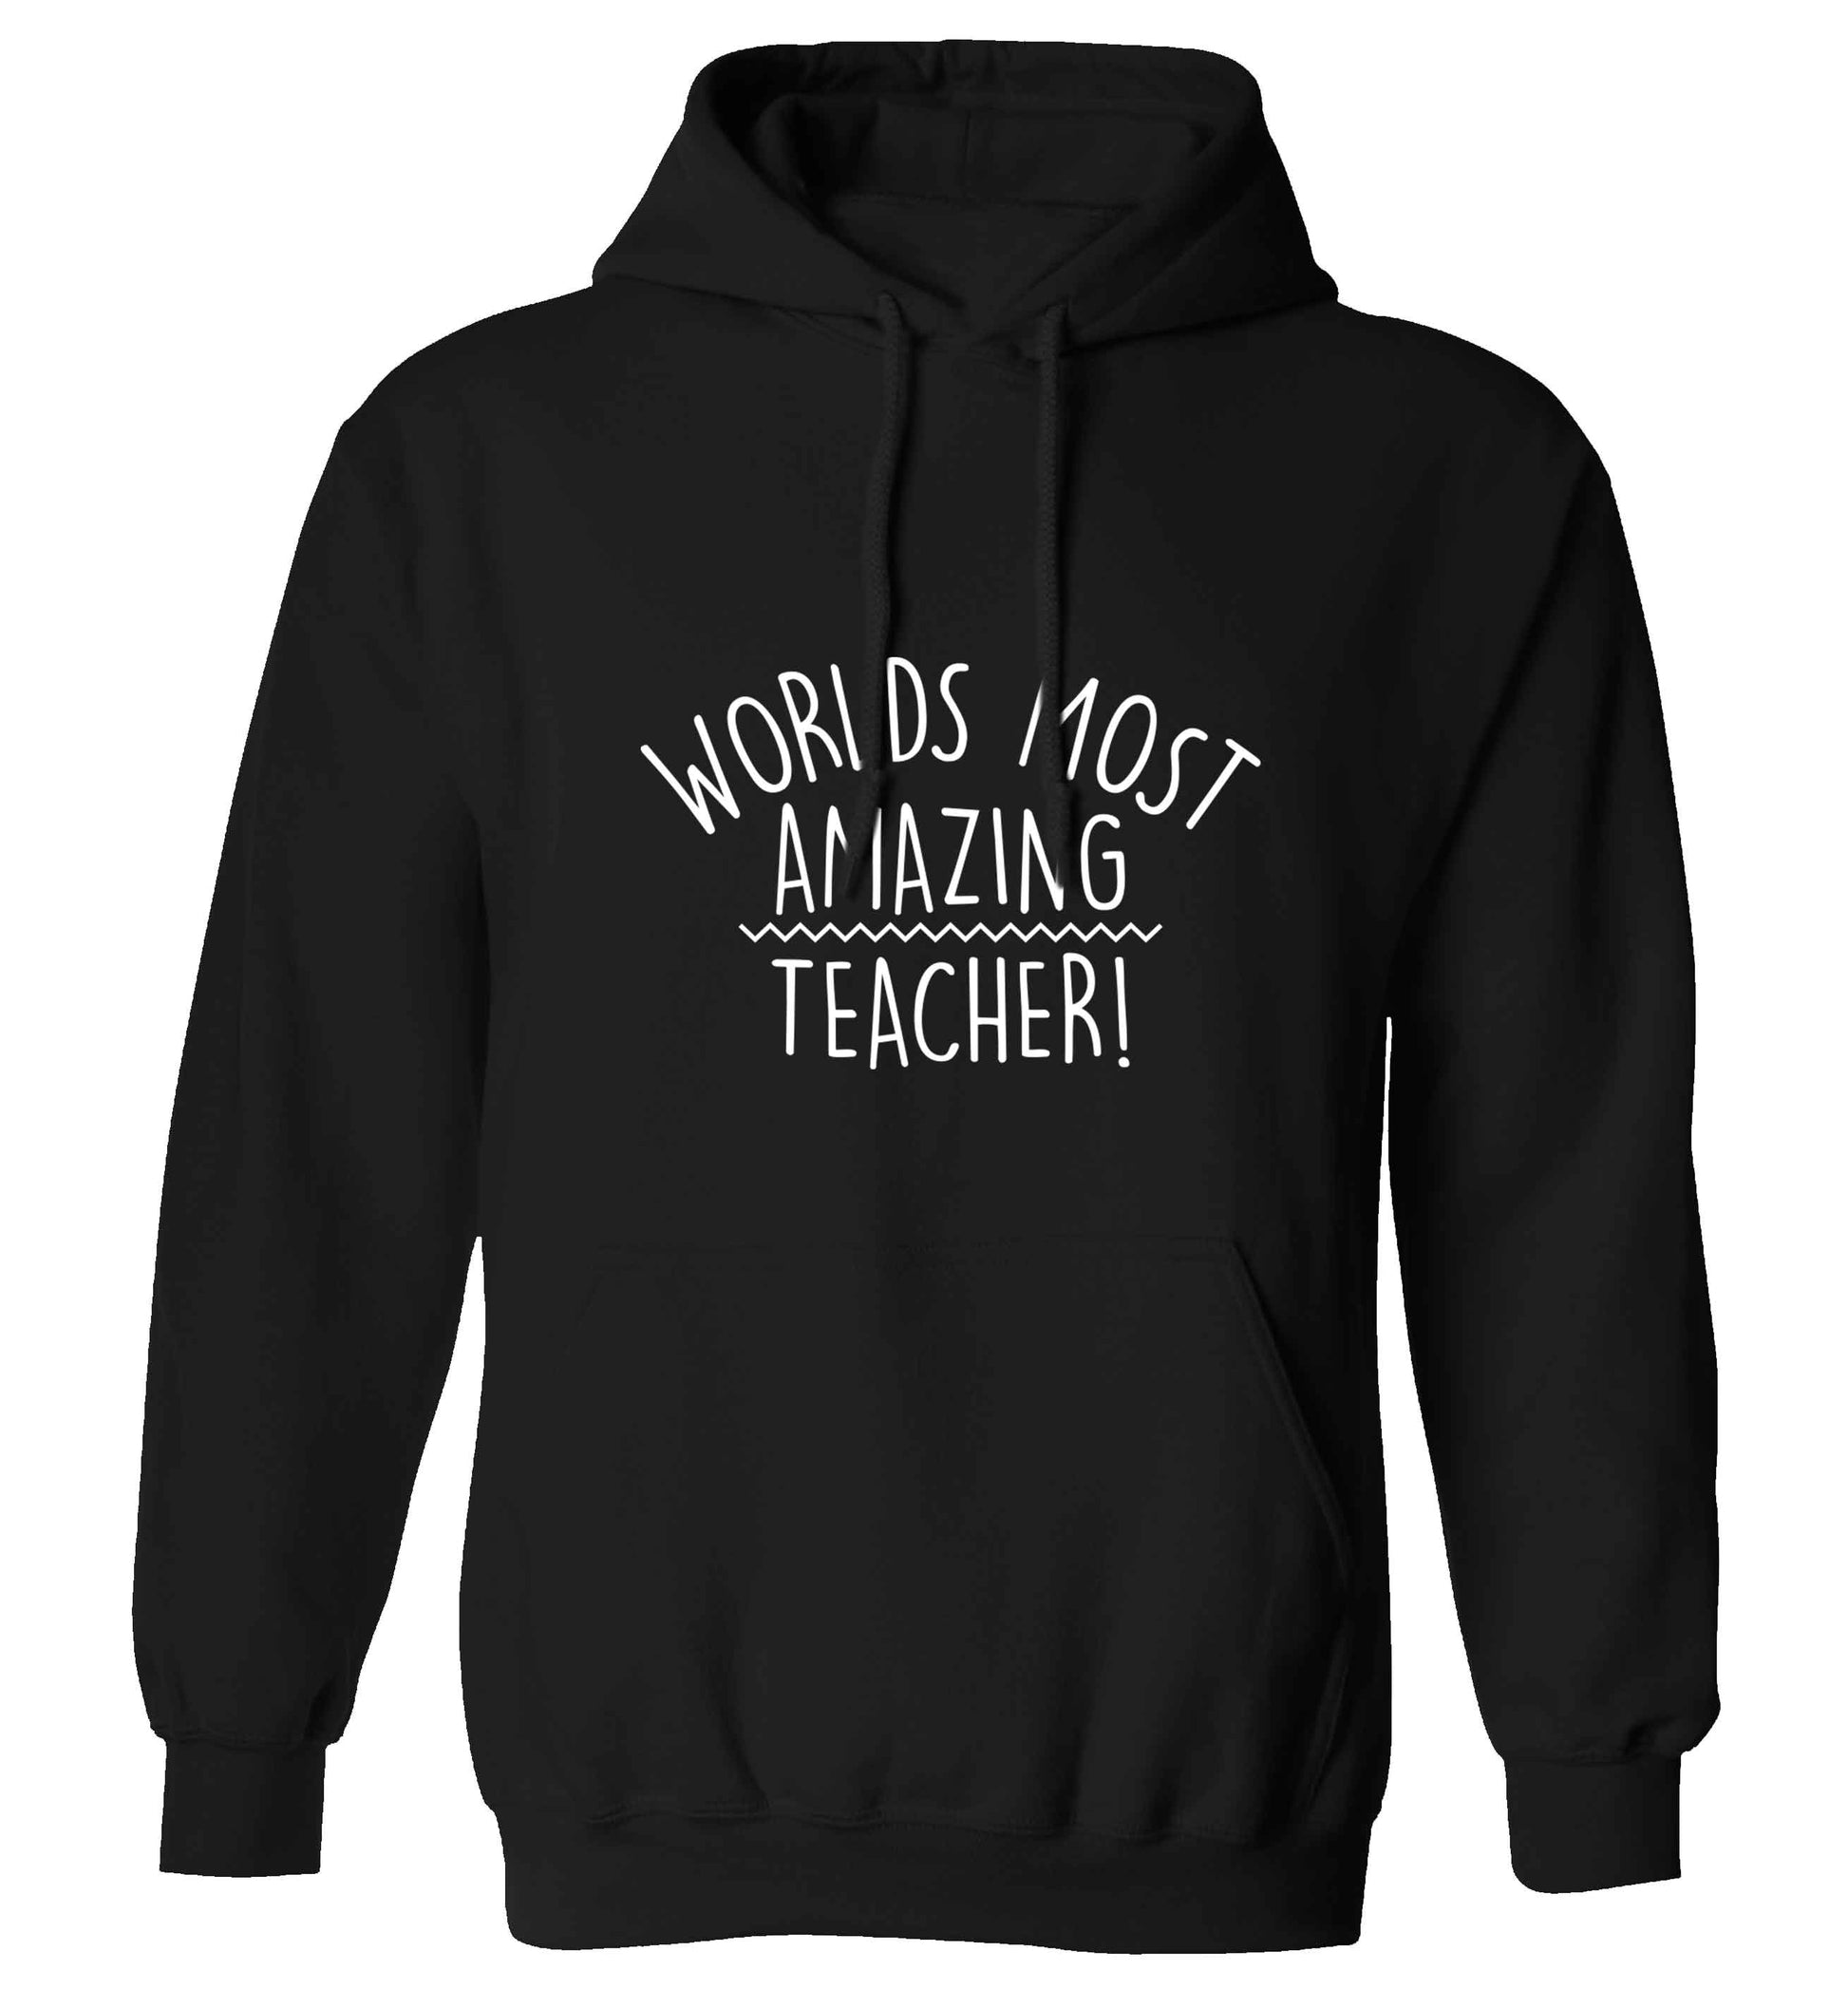 Worlds most amazing teacher adults unisex black hoodie 2XL